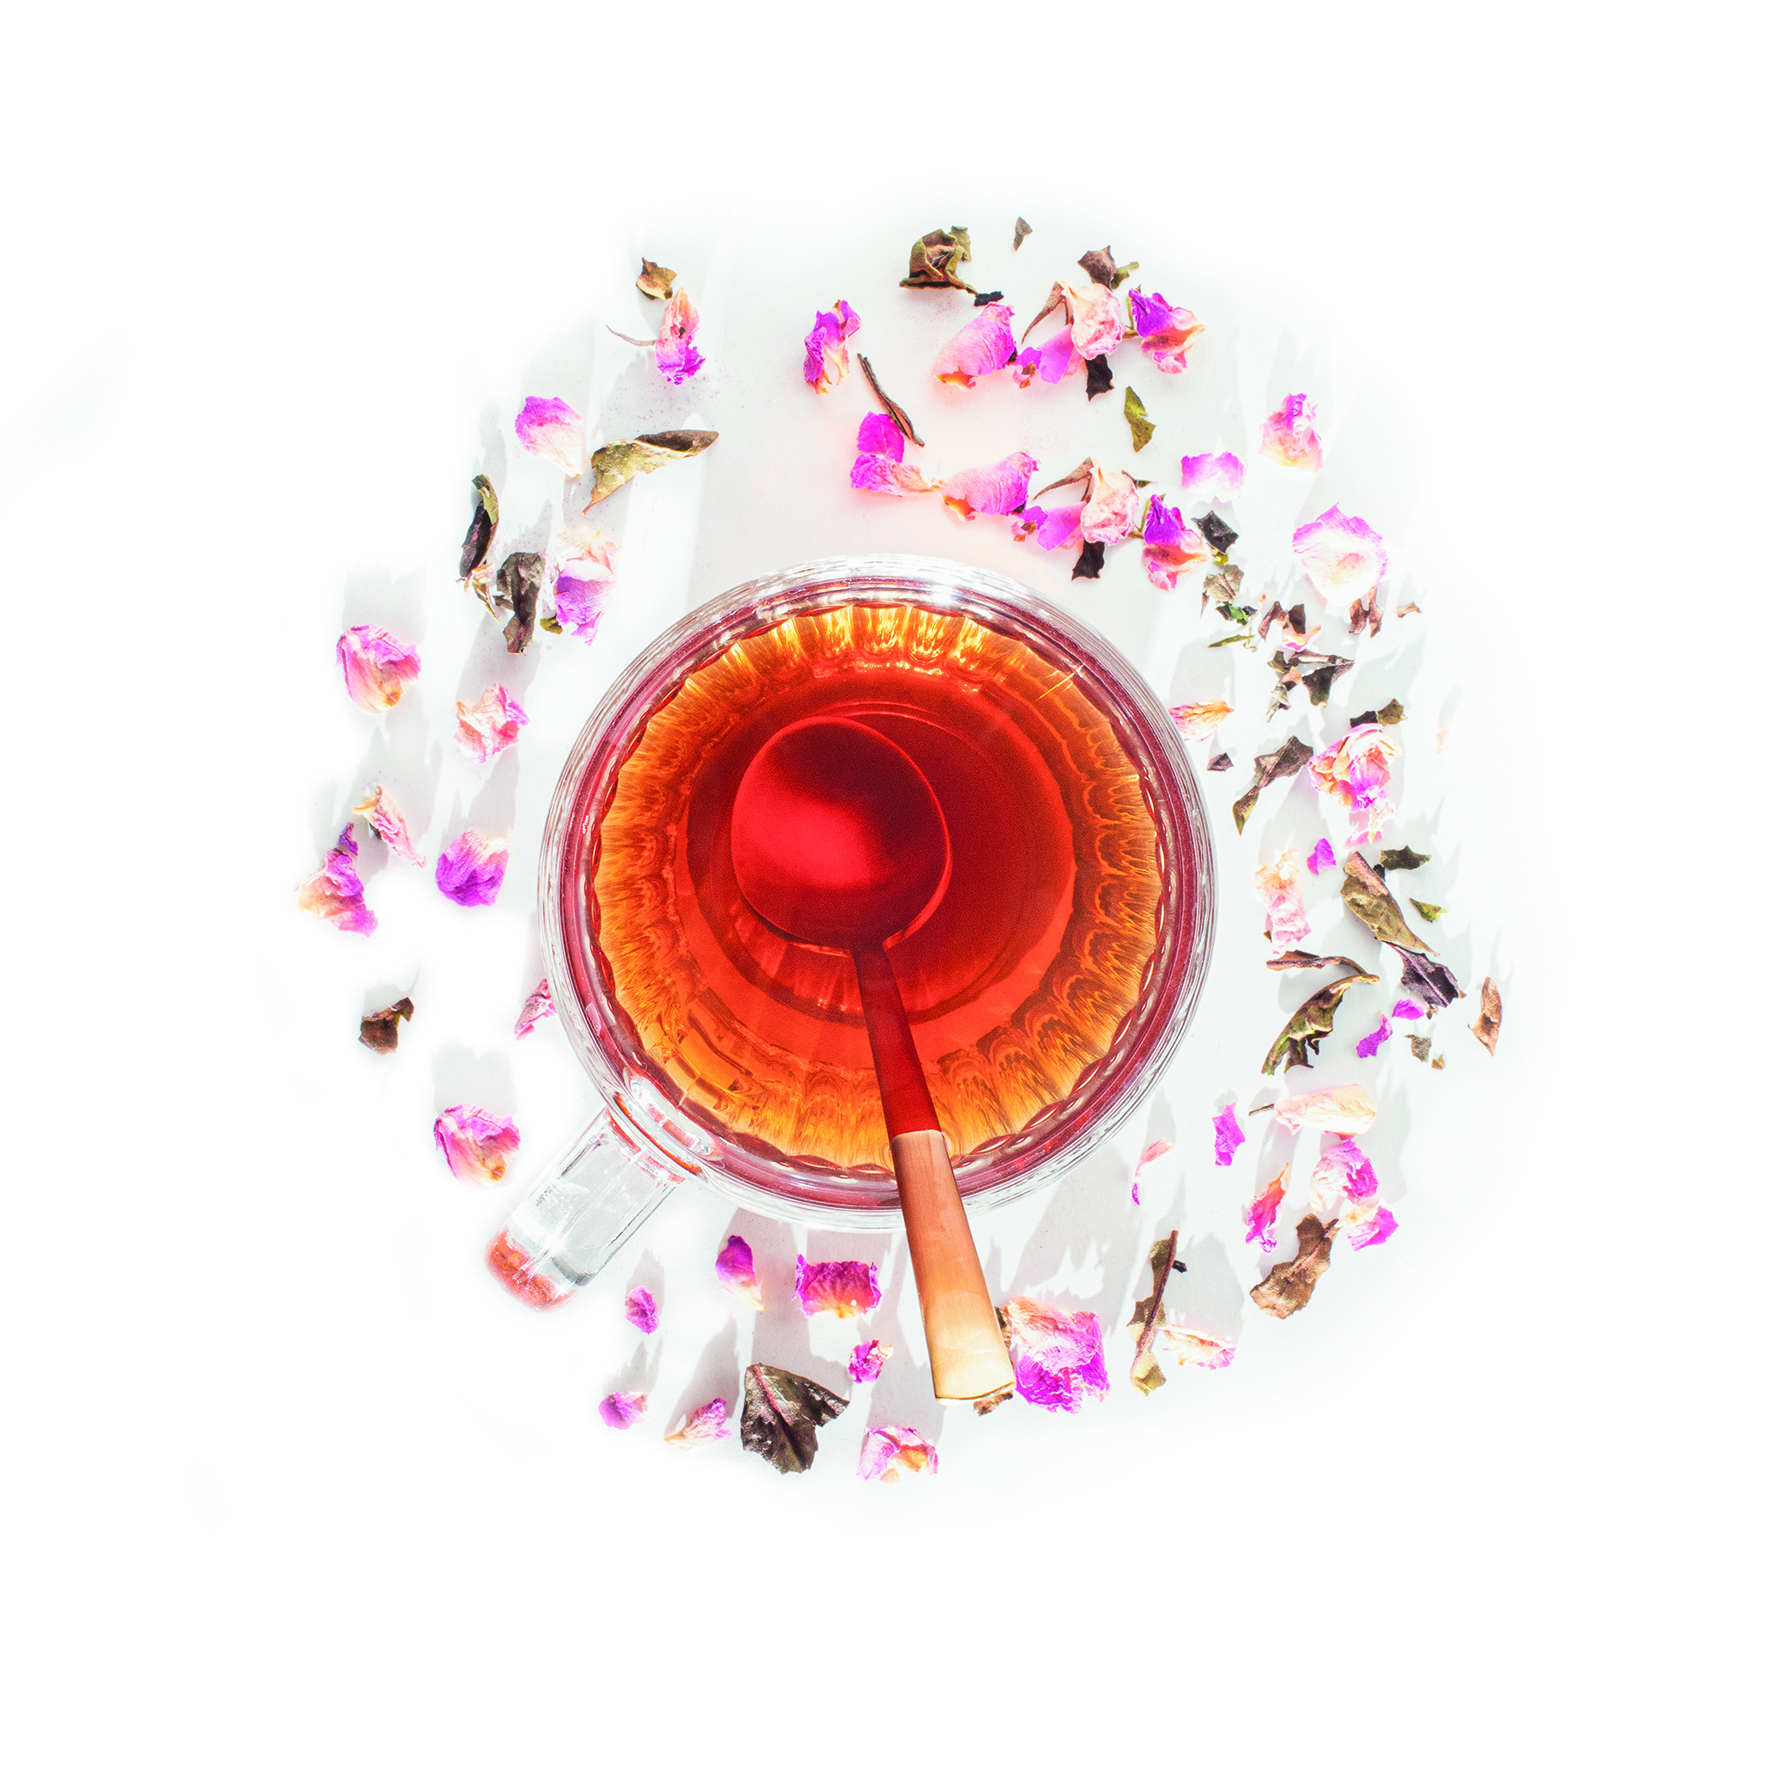 Organic white tea with rose petals 40g